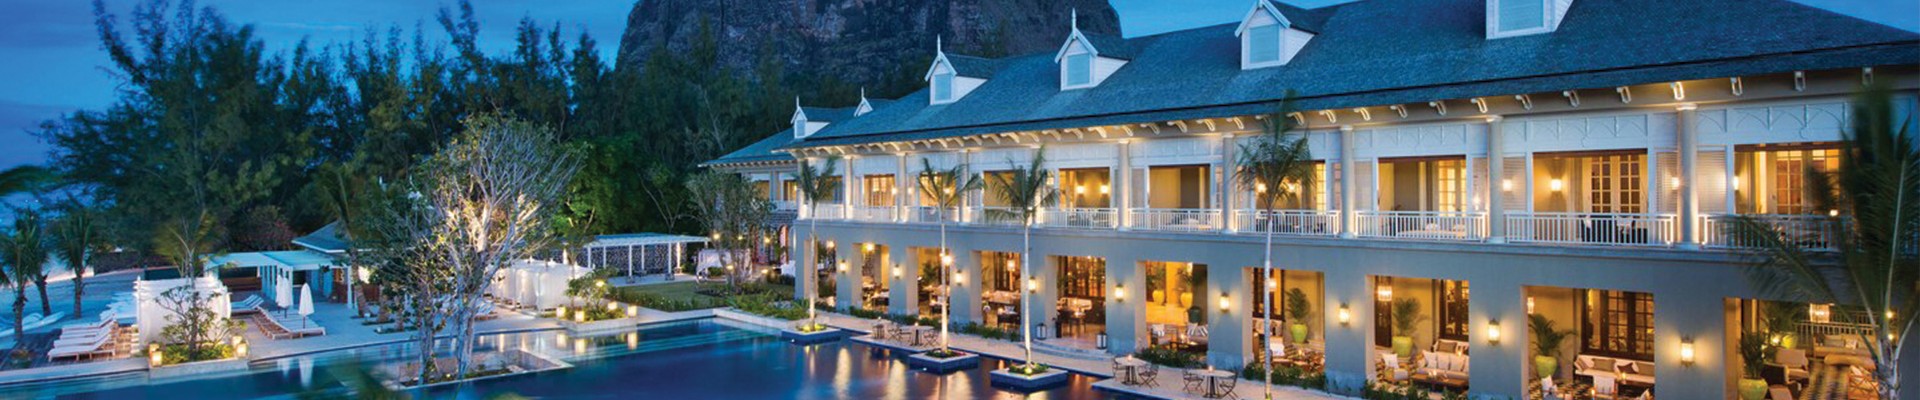 5* Luxury JW Marriott - Mauritius Package (7 Nights)